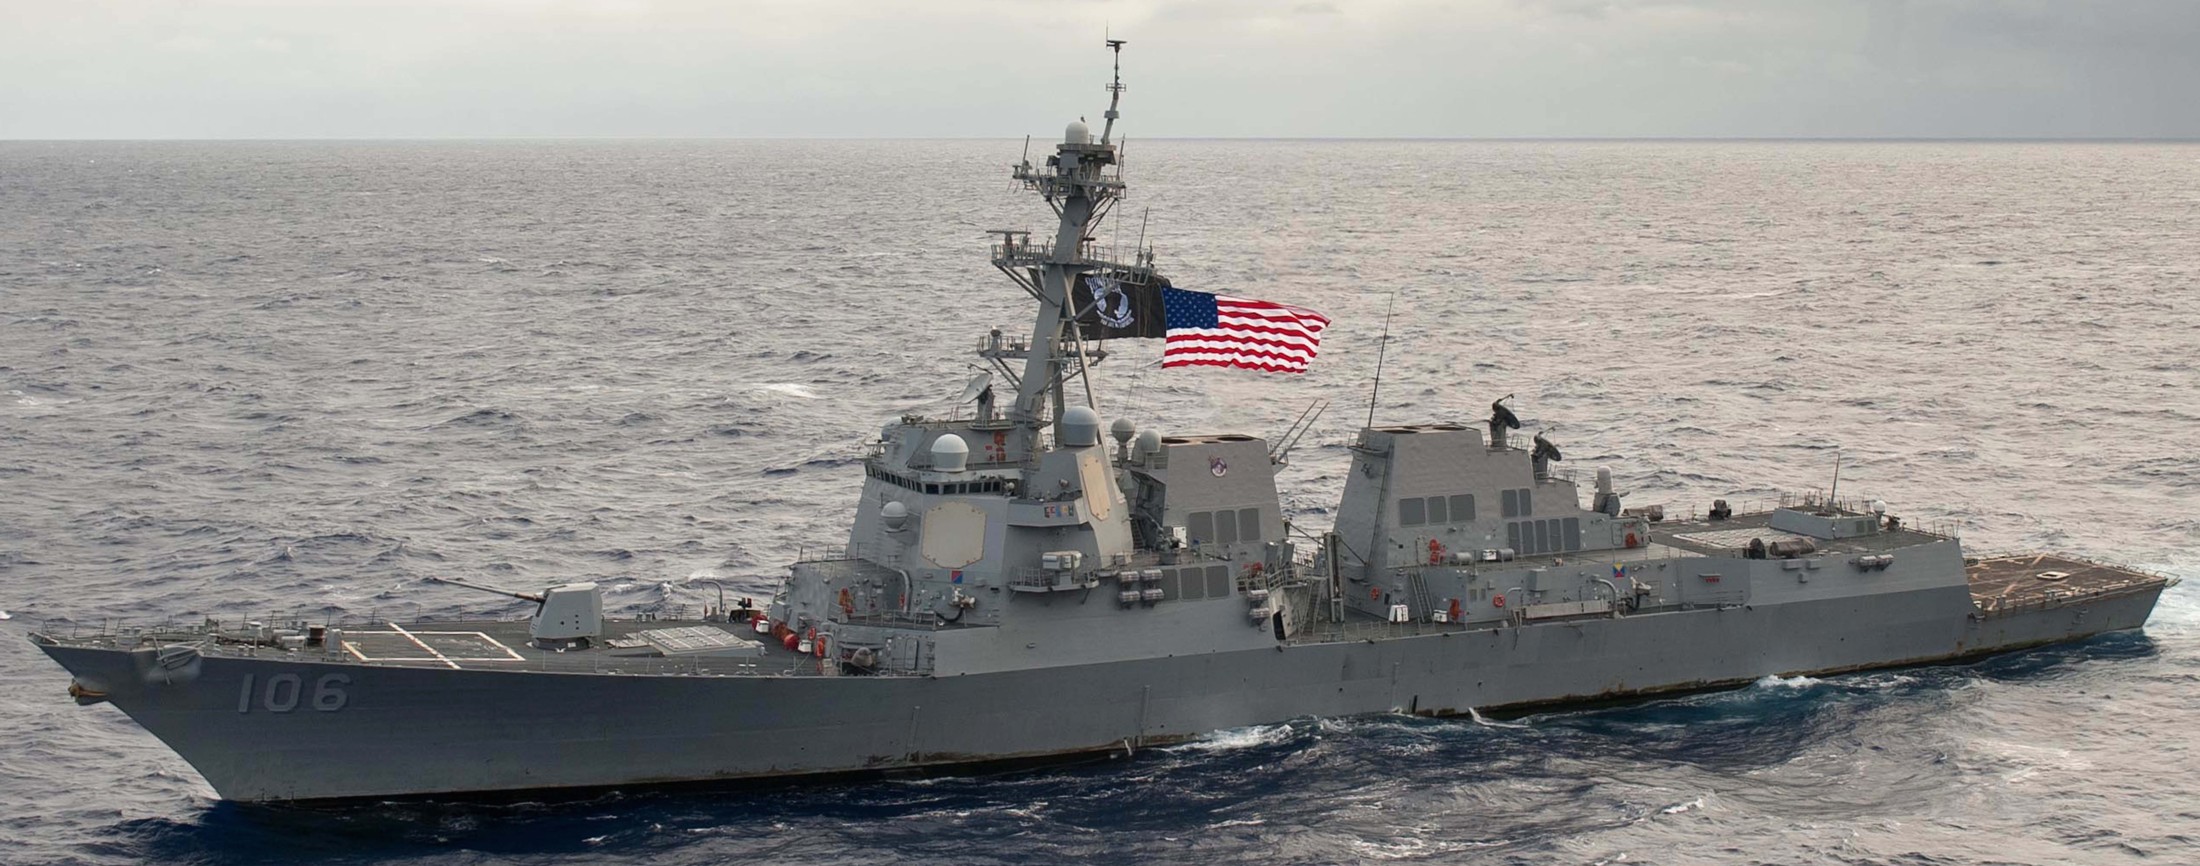 ddg-106 uss stockdale arleigh burke class guided missile destroyer aegis us navy pacific ocean 78